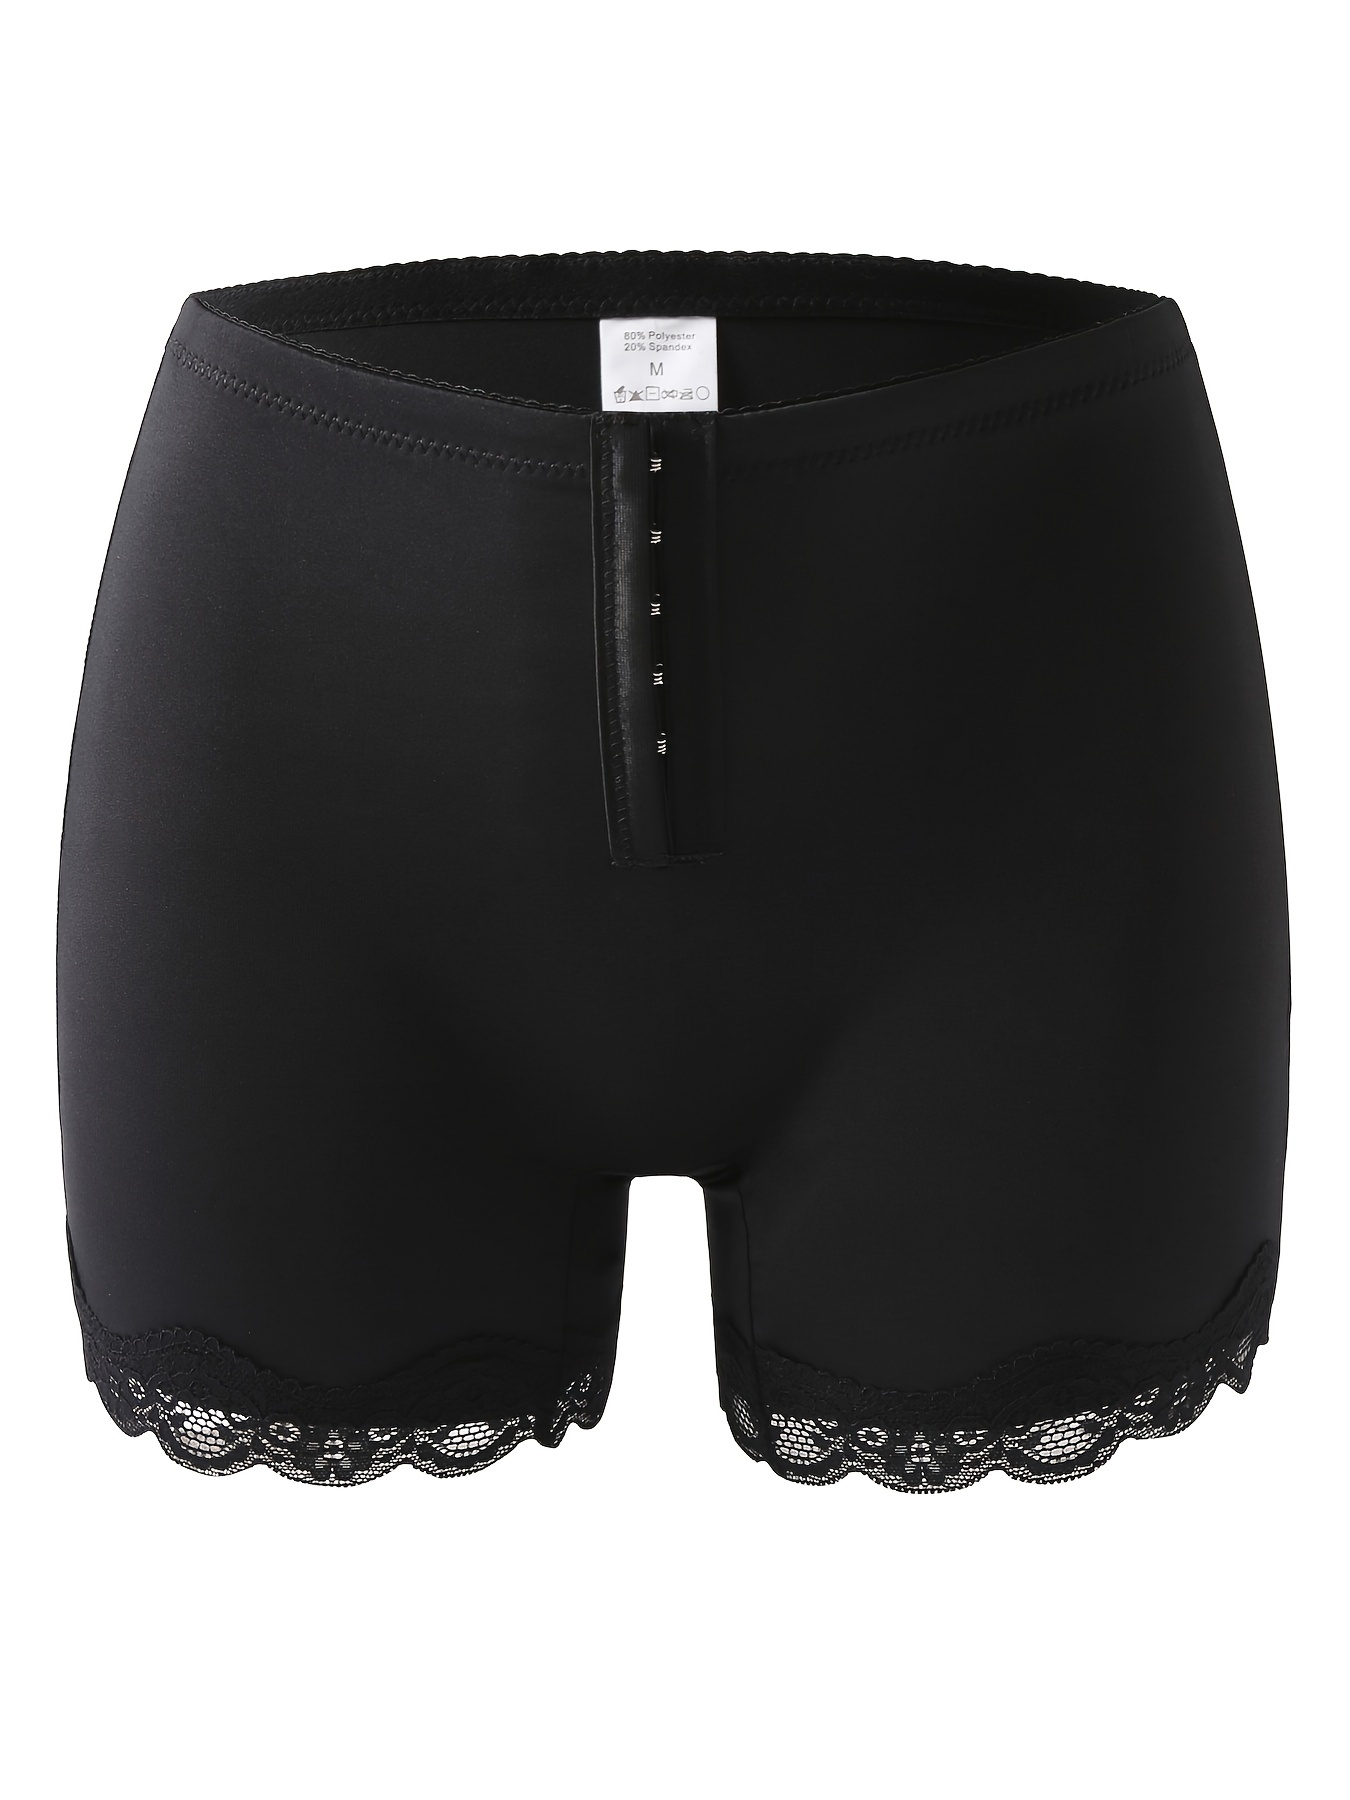 Buy Butt Lifting Underwear Boy Shorts Butt Lifter Tummy Control